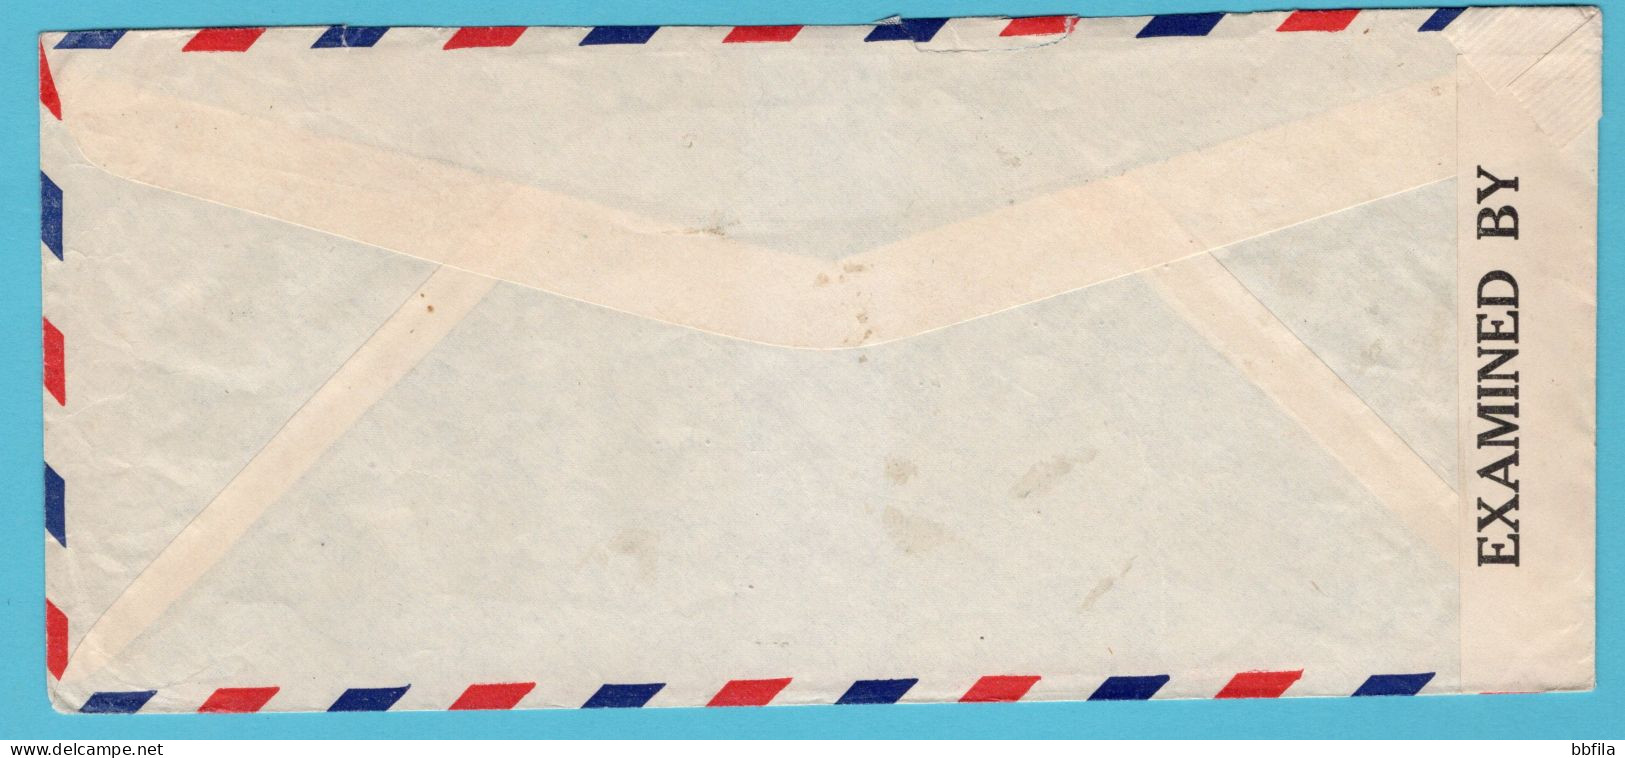 CURAÇAO Luchtpost Censuur Brief 1943 Curaçao Naar Newark, USA - Niederländische Antillen, Curaçao, Aruba